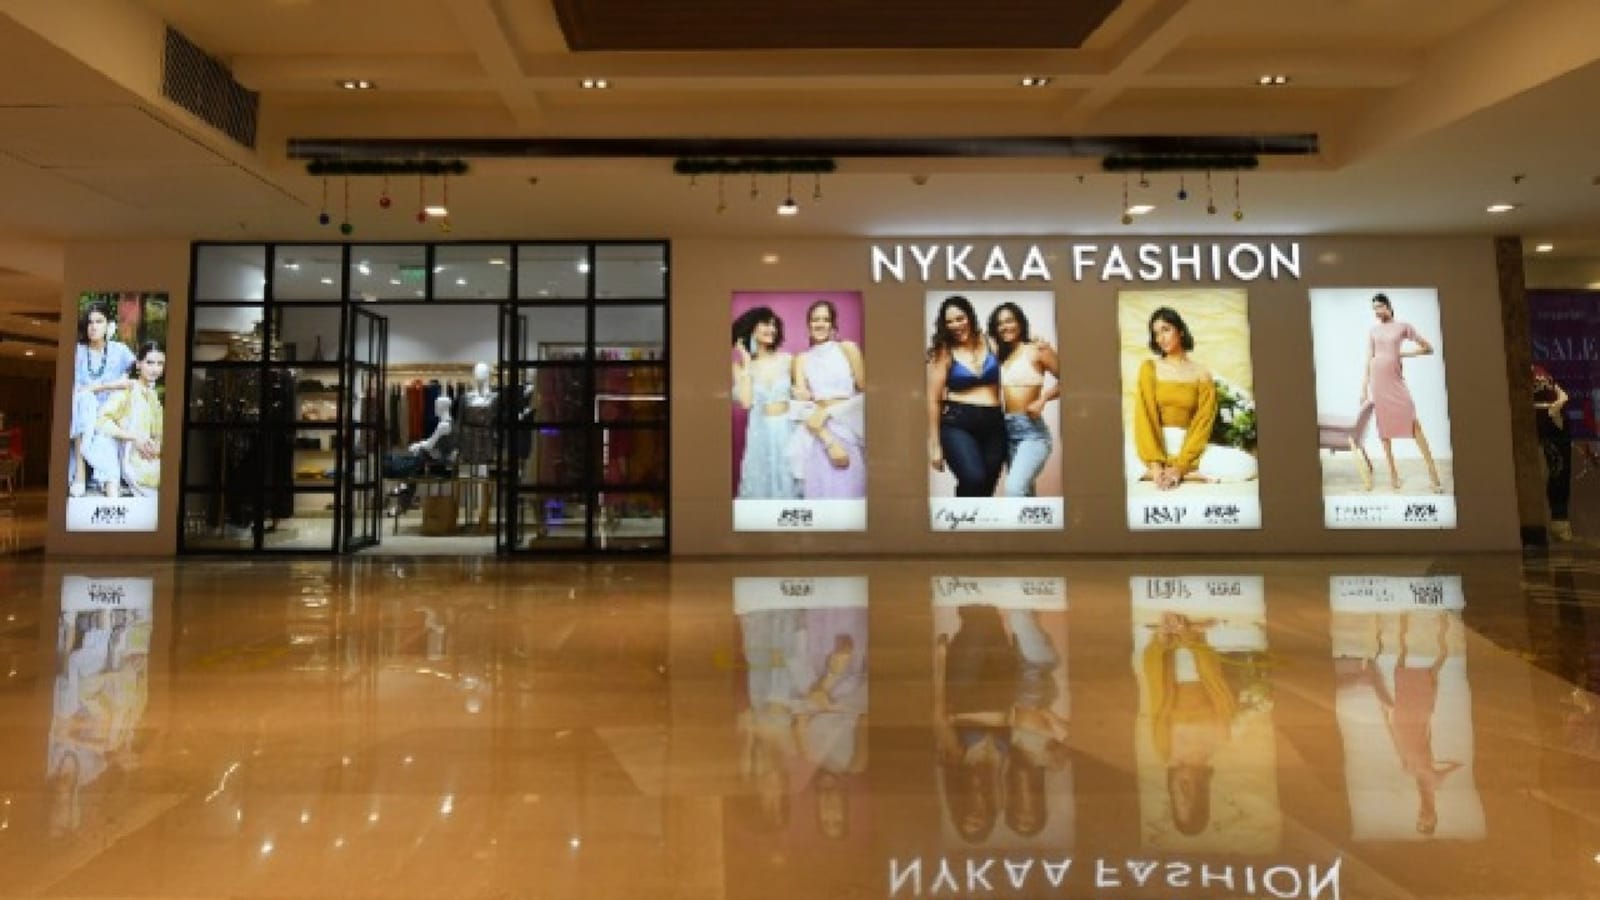 NA-KD comes to India with Nykaa Fashion